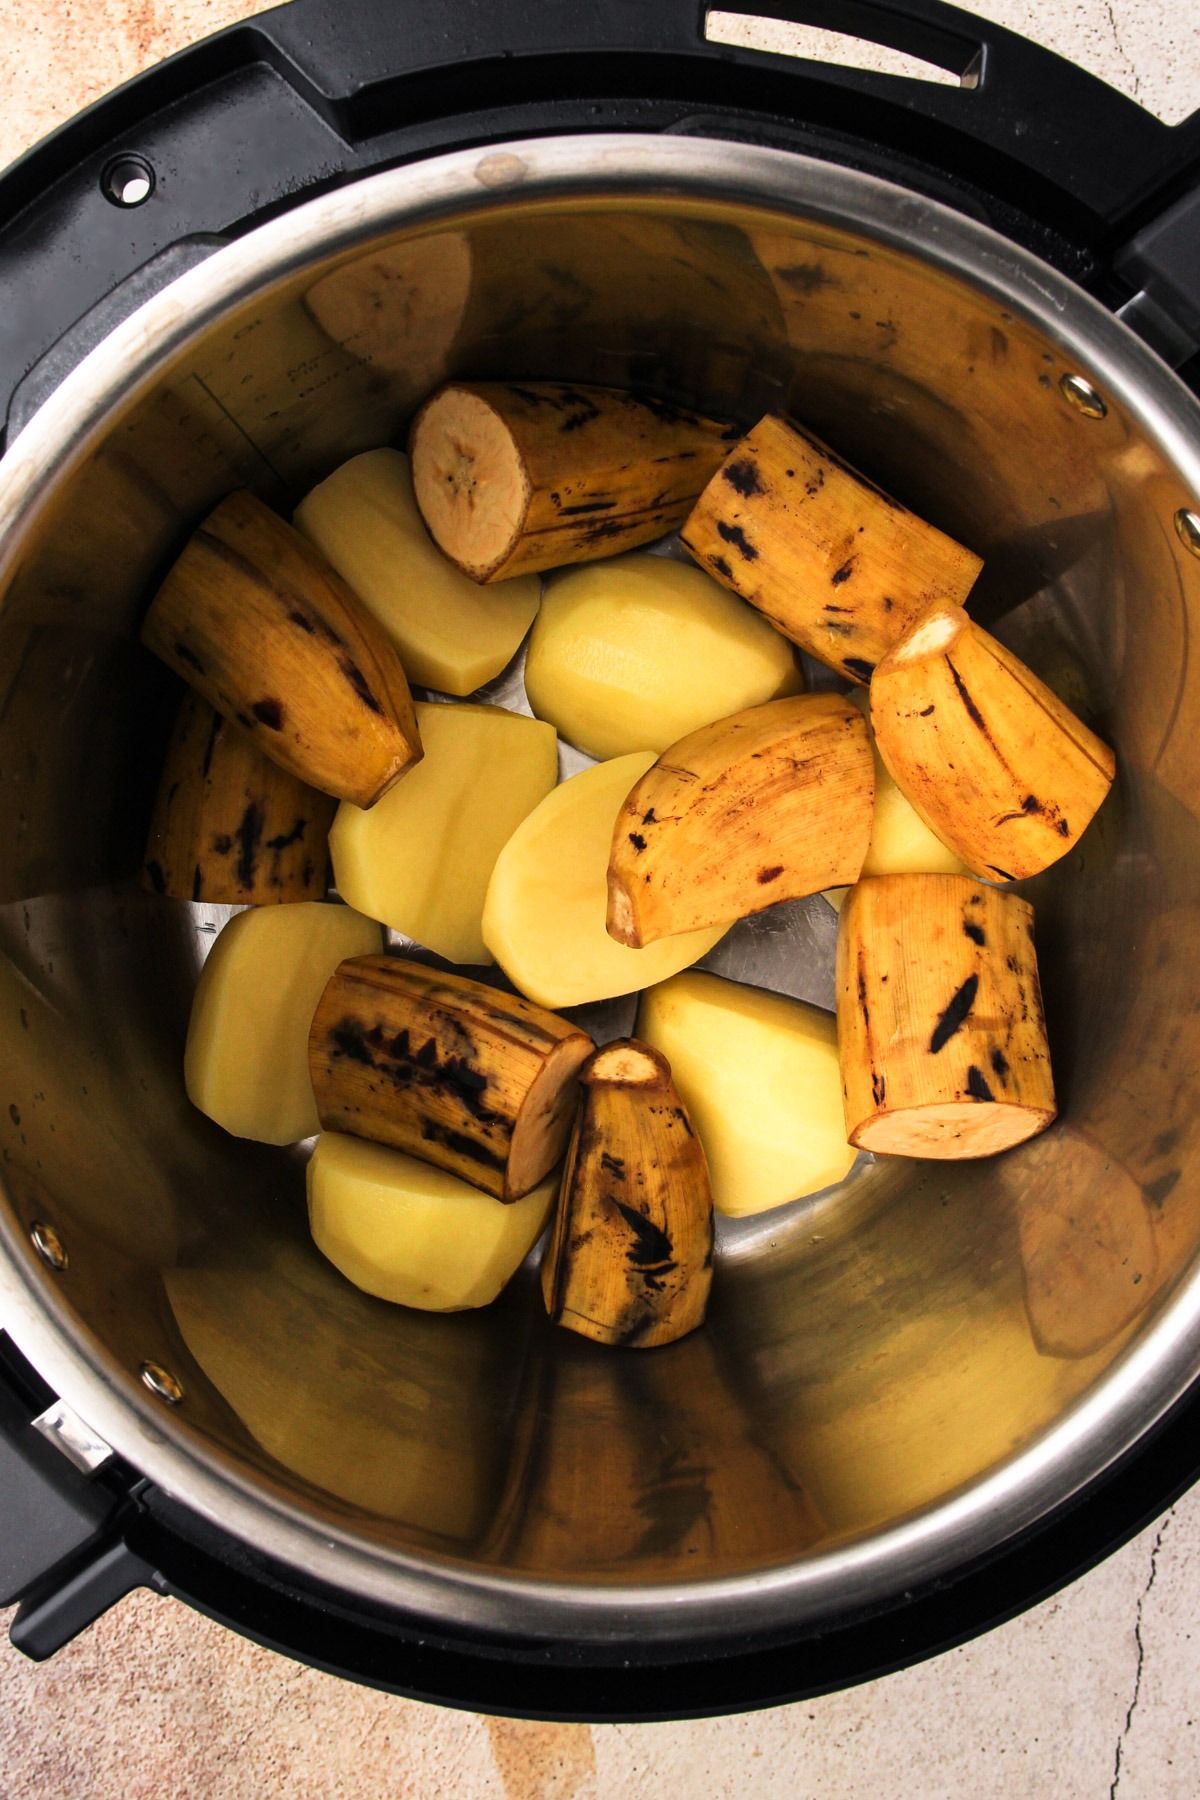 Cut potatoes and ripe plantains in an instant pot for sudado de pollo.